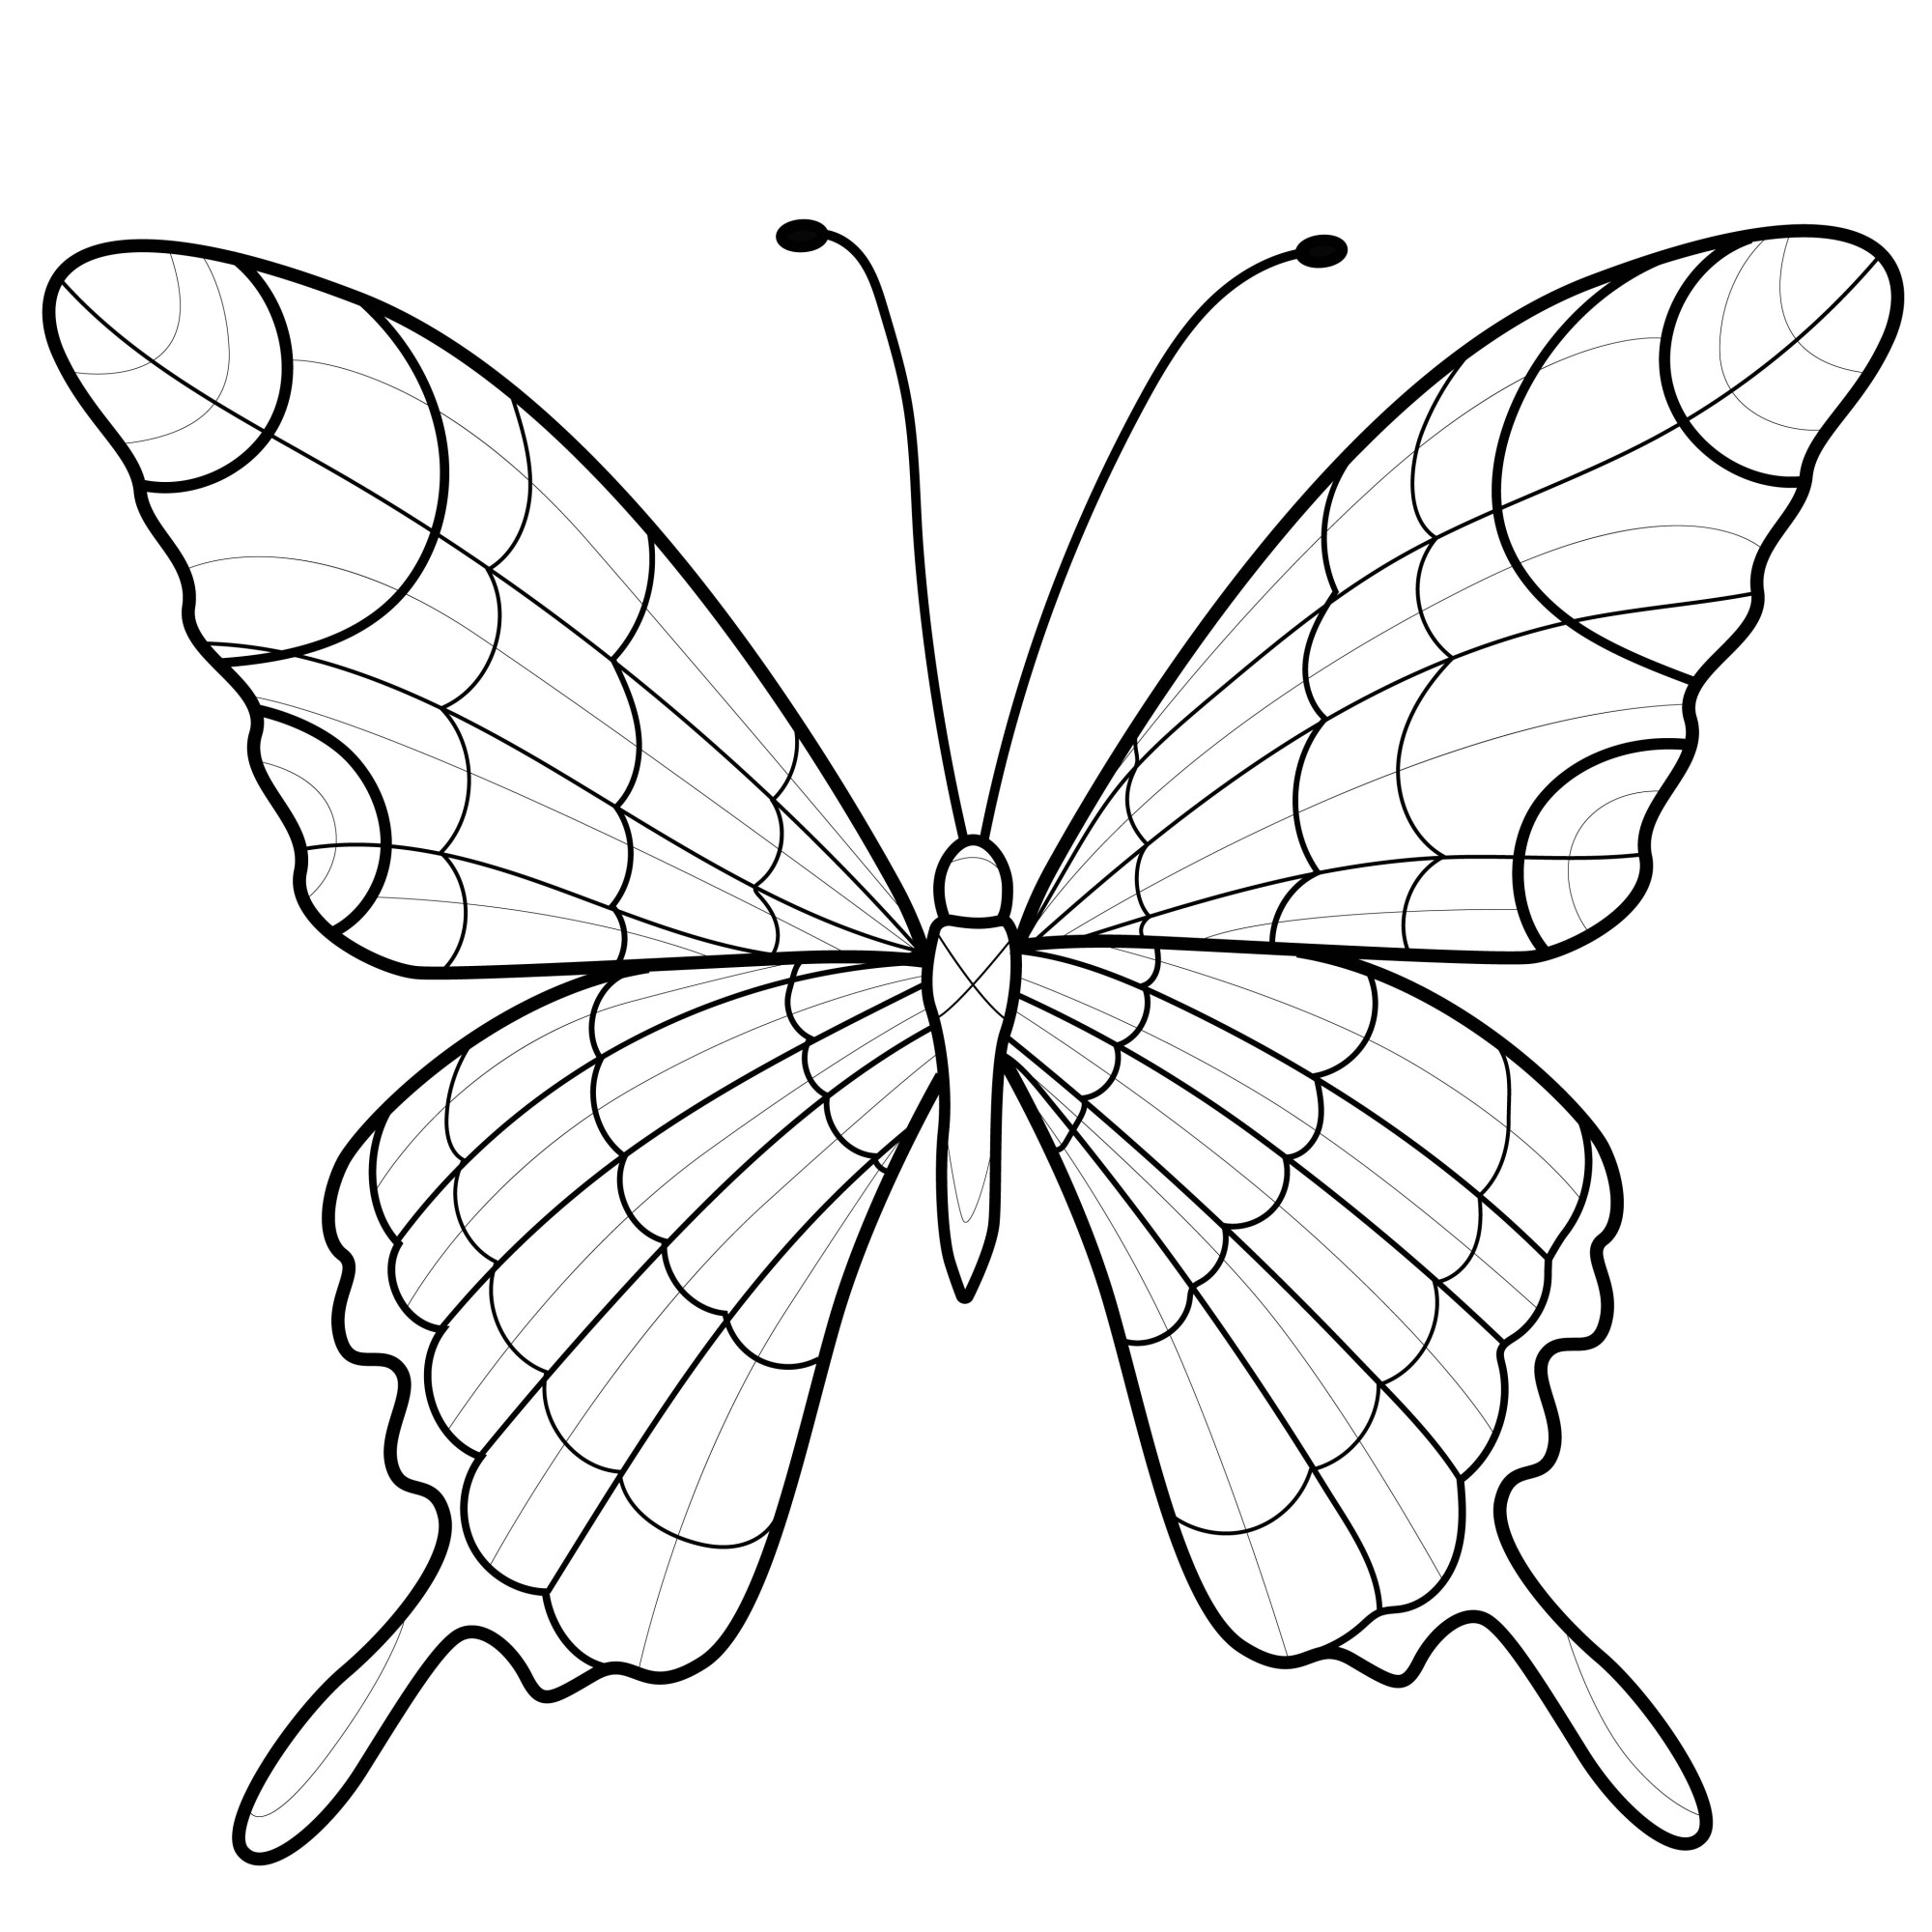 Раскраска для детей: красочная бабочка